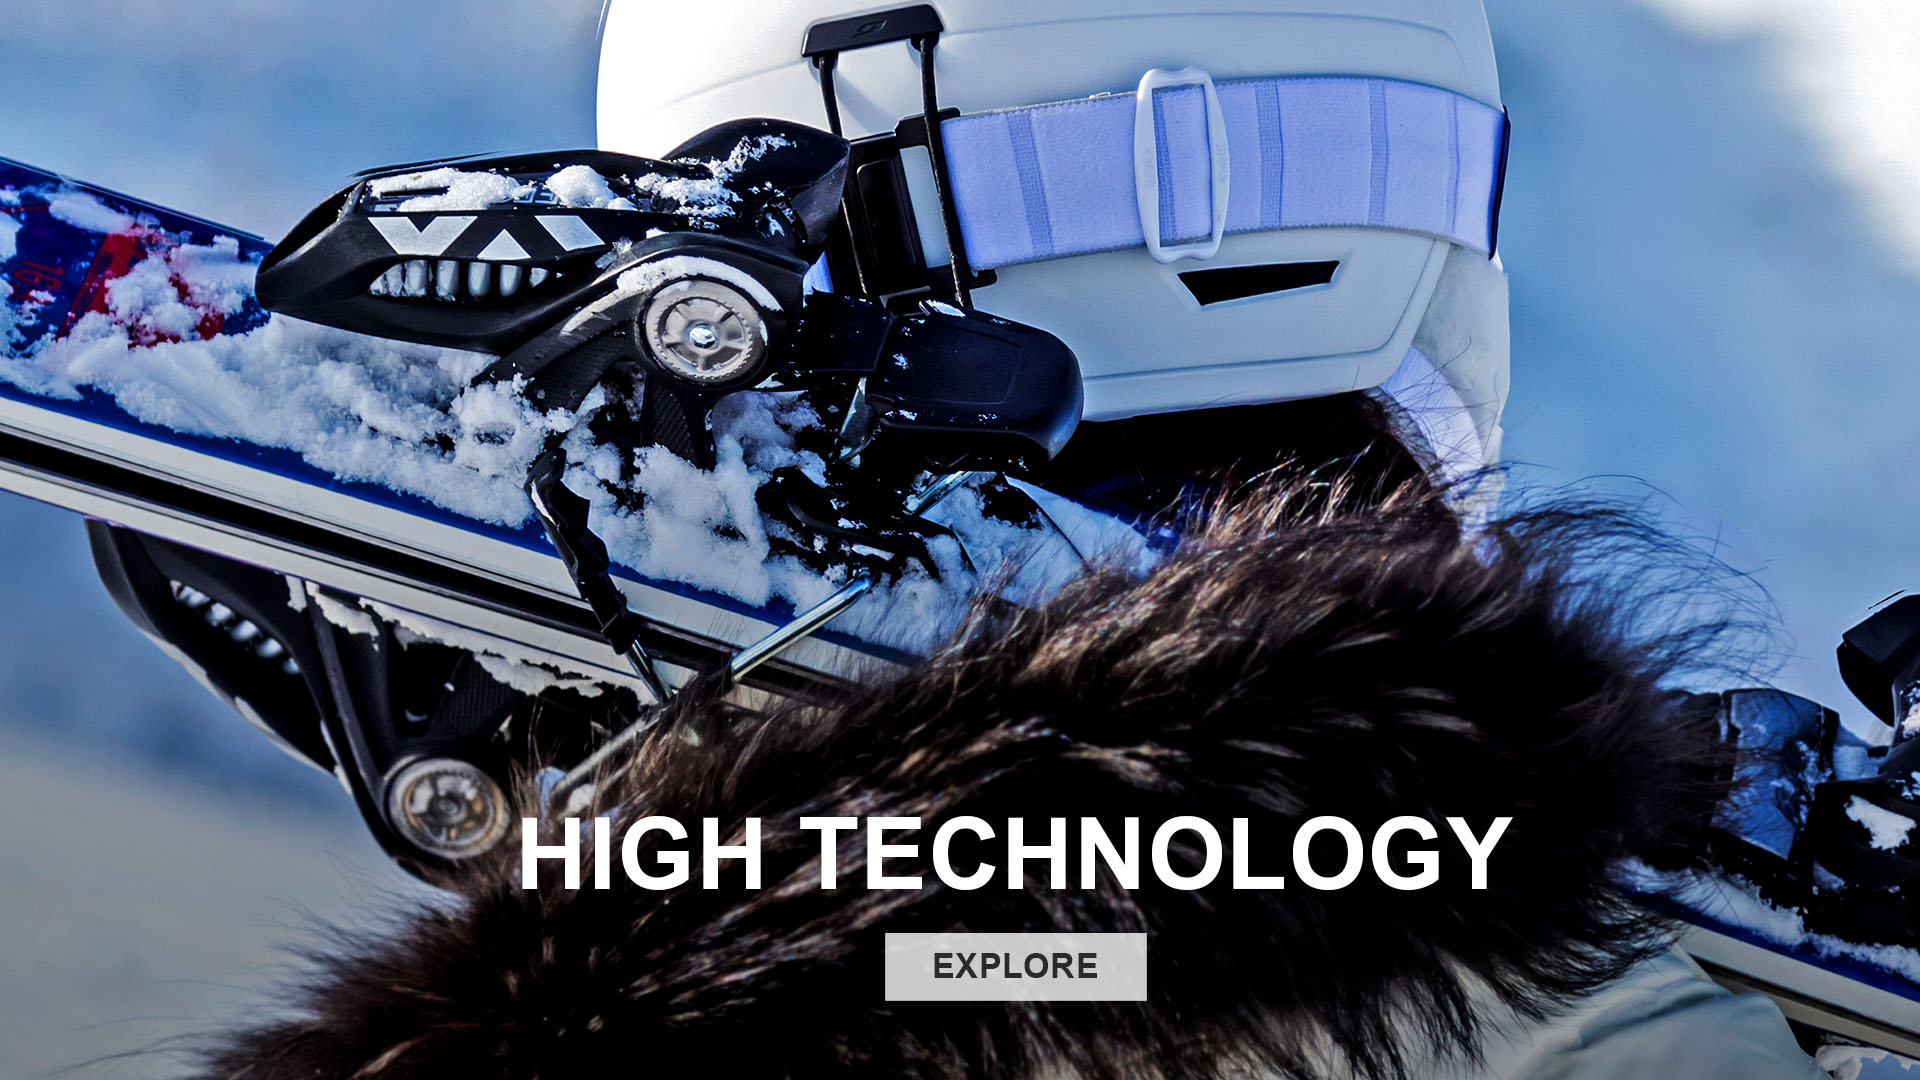 HIGH TECHNOLOGY 高科技 滑雪頭盔 滑雪安全帽